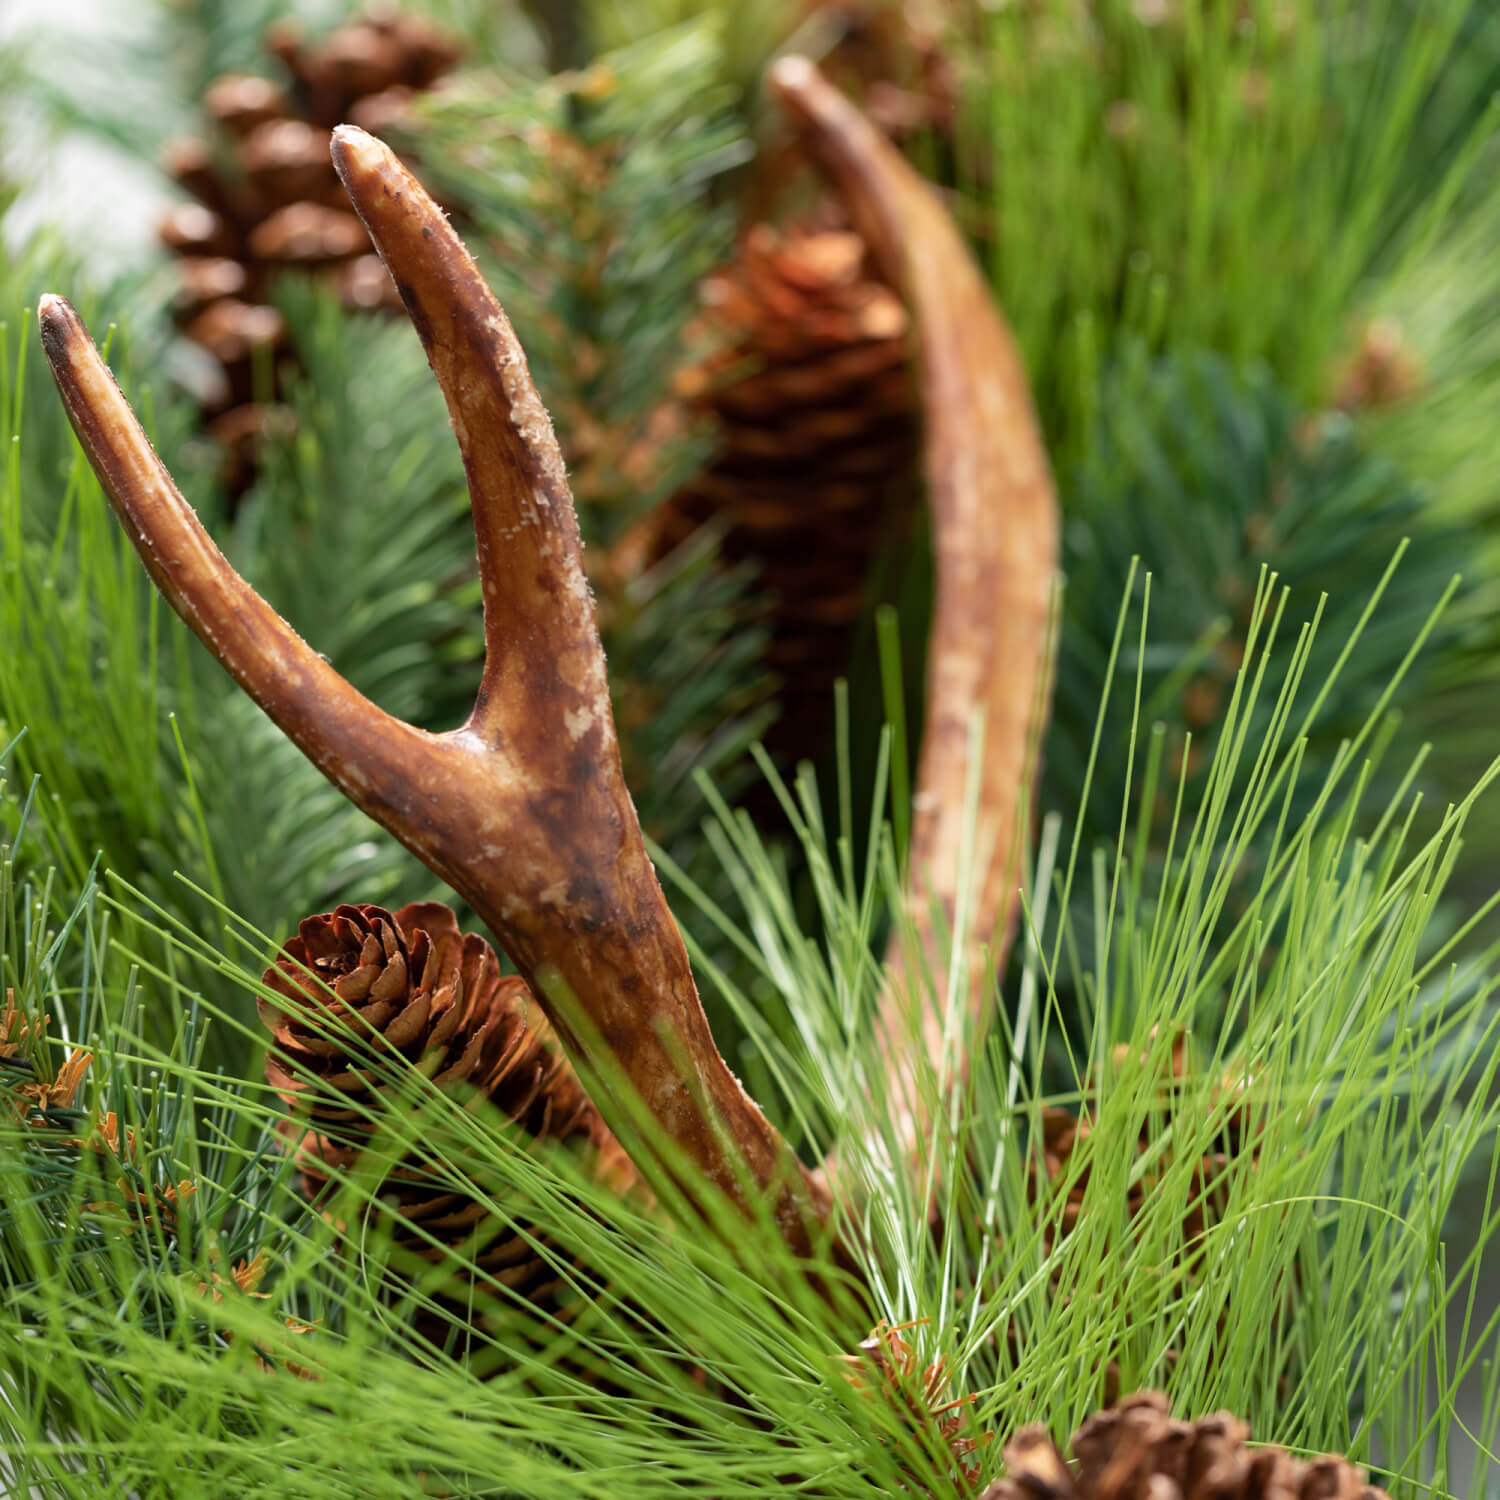 Pine Cone &amp; Antler Wreath - Online Only